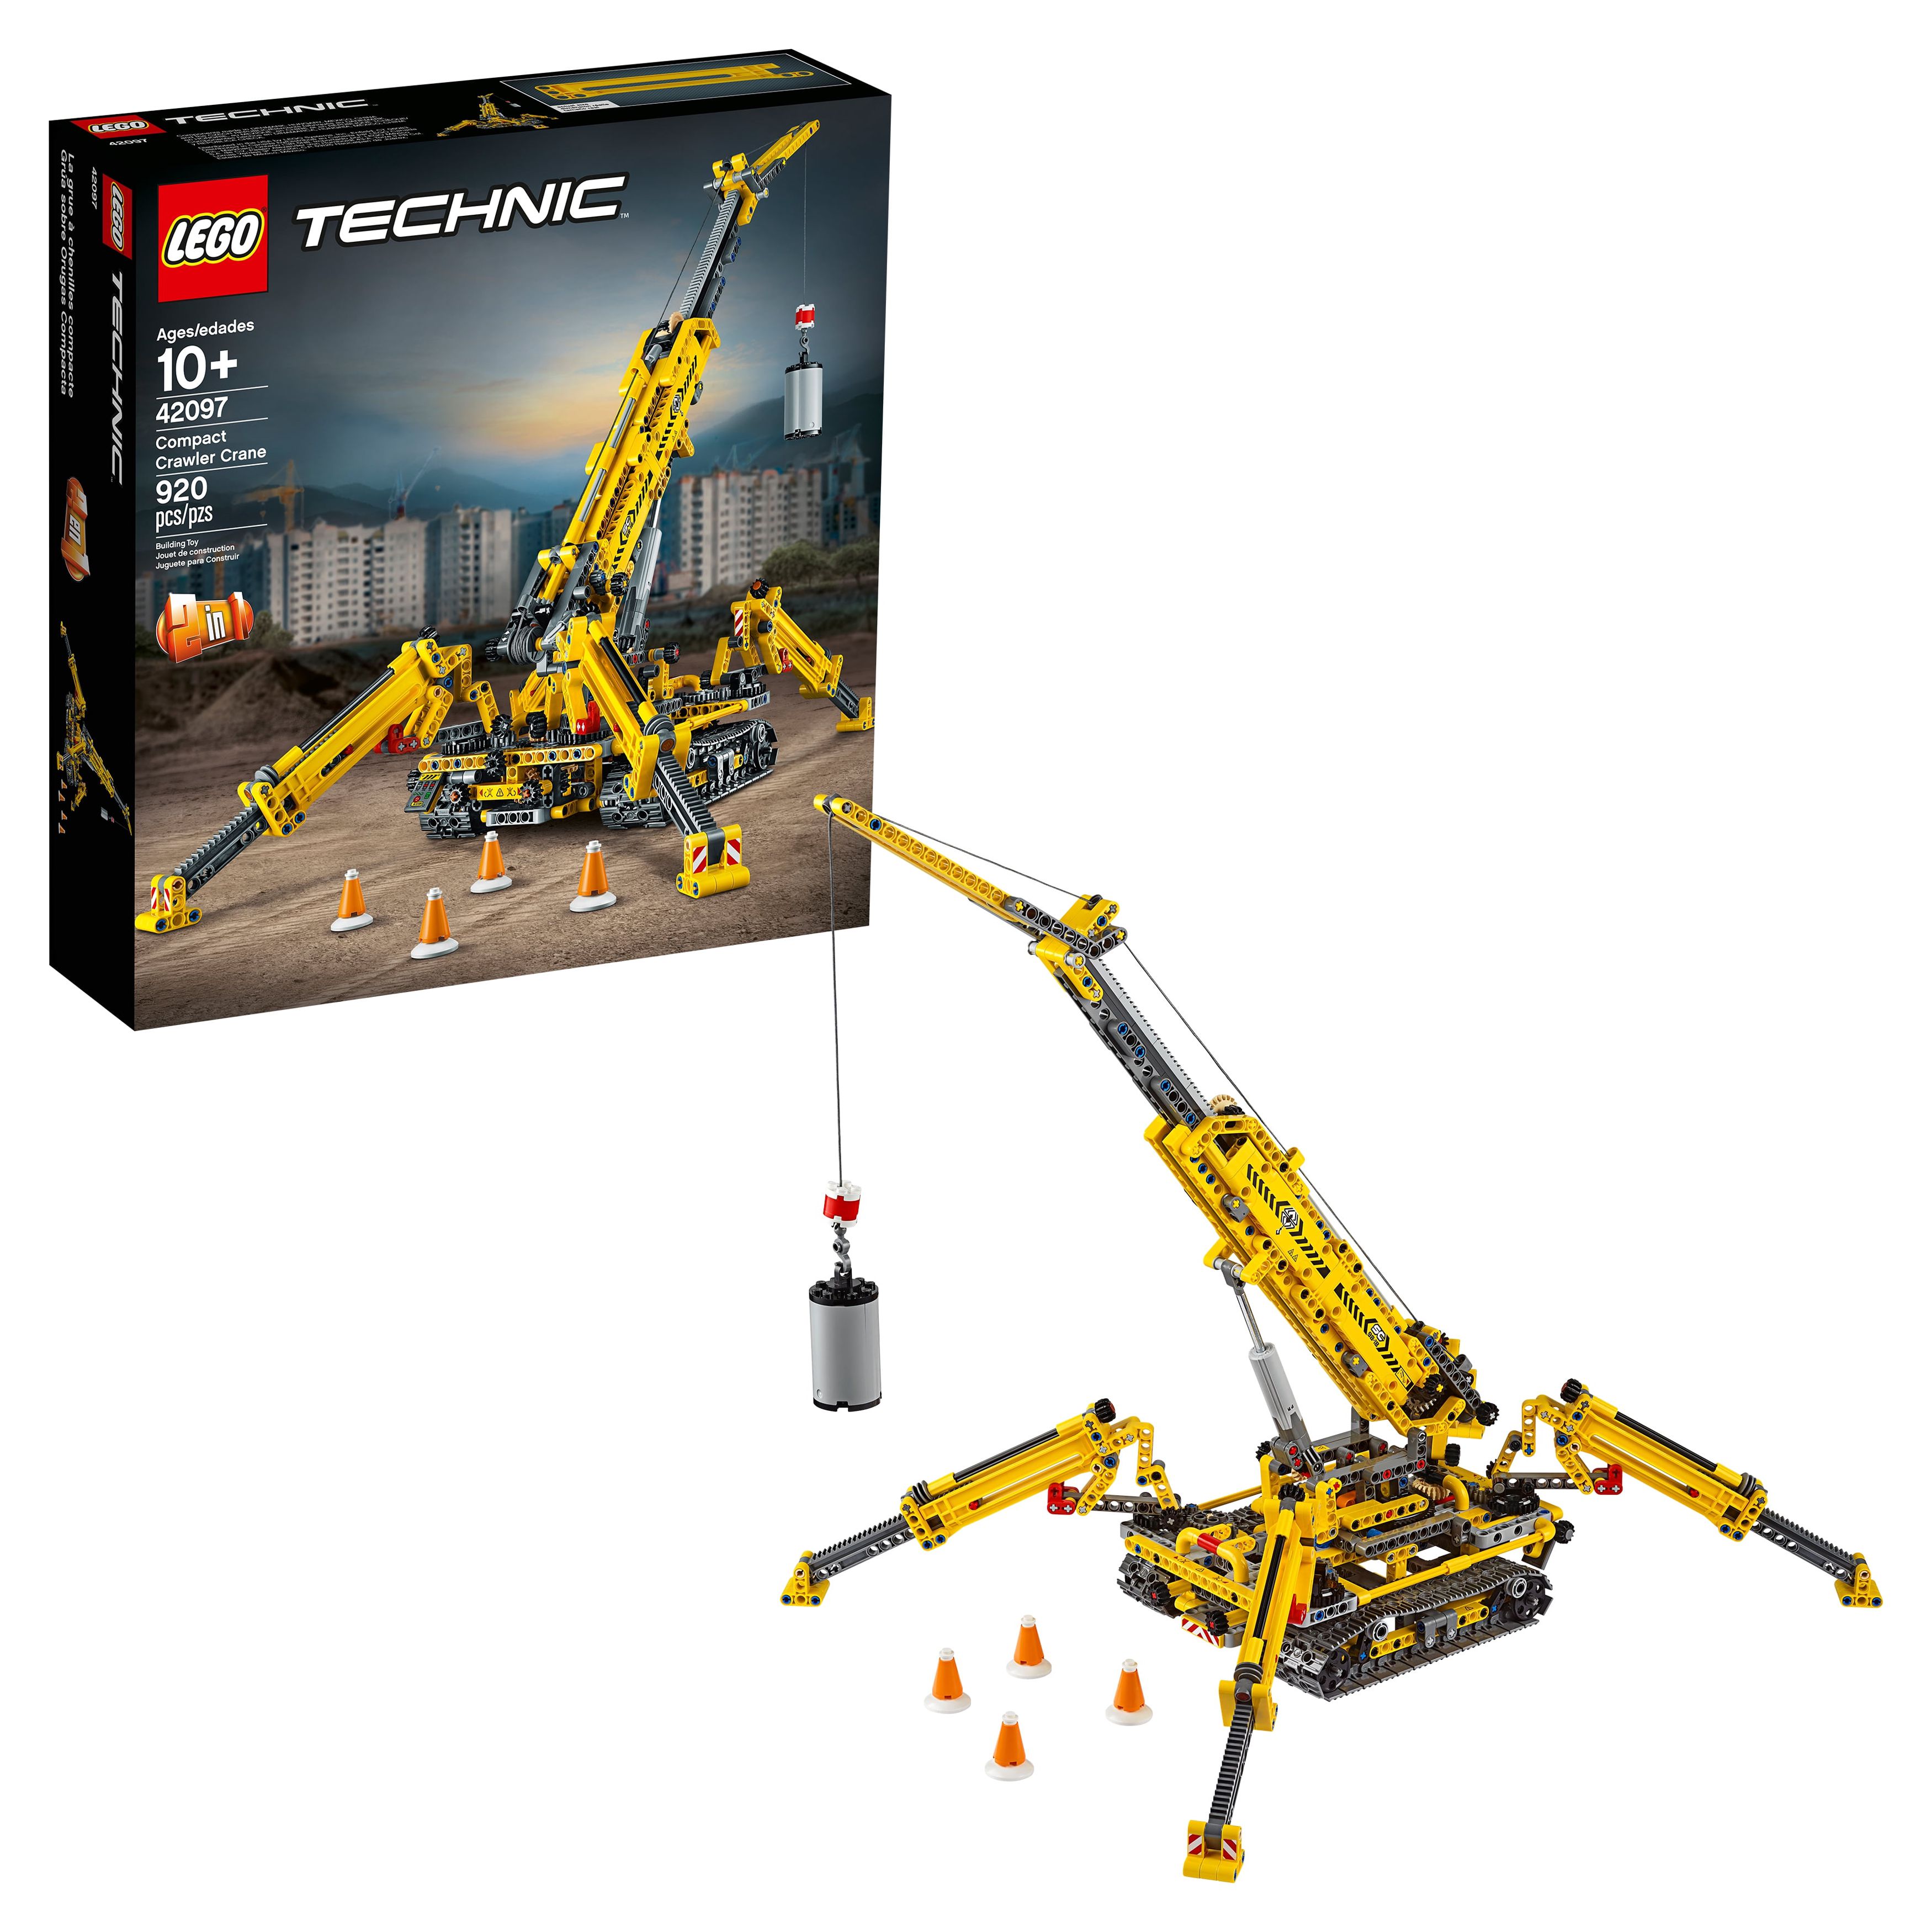 LEGO Technic Compact Crawler Crane 42097 Construction Model Crane Set (920 Pieces) - image 1 of 8